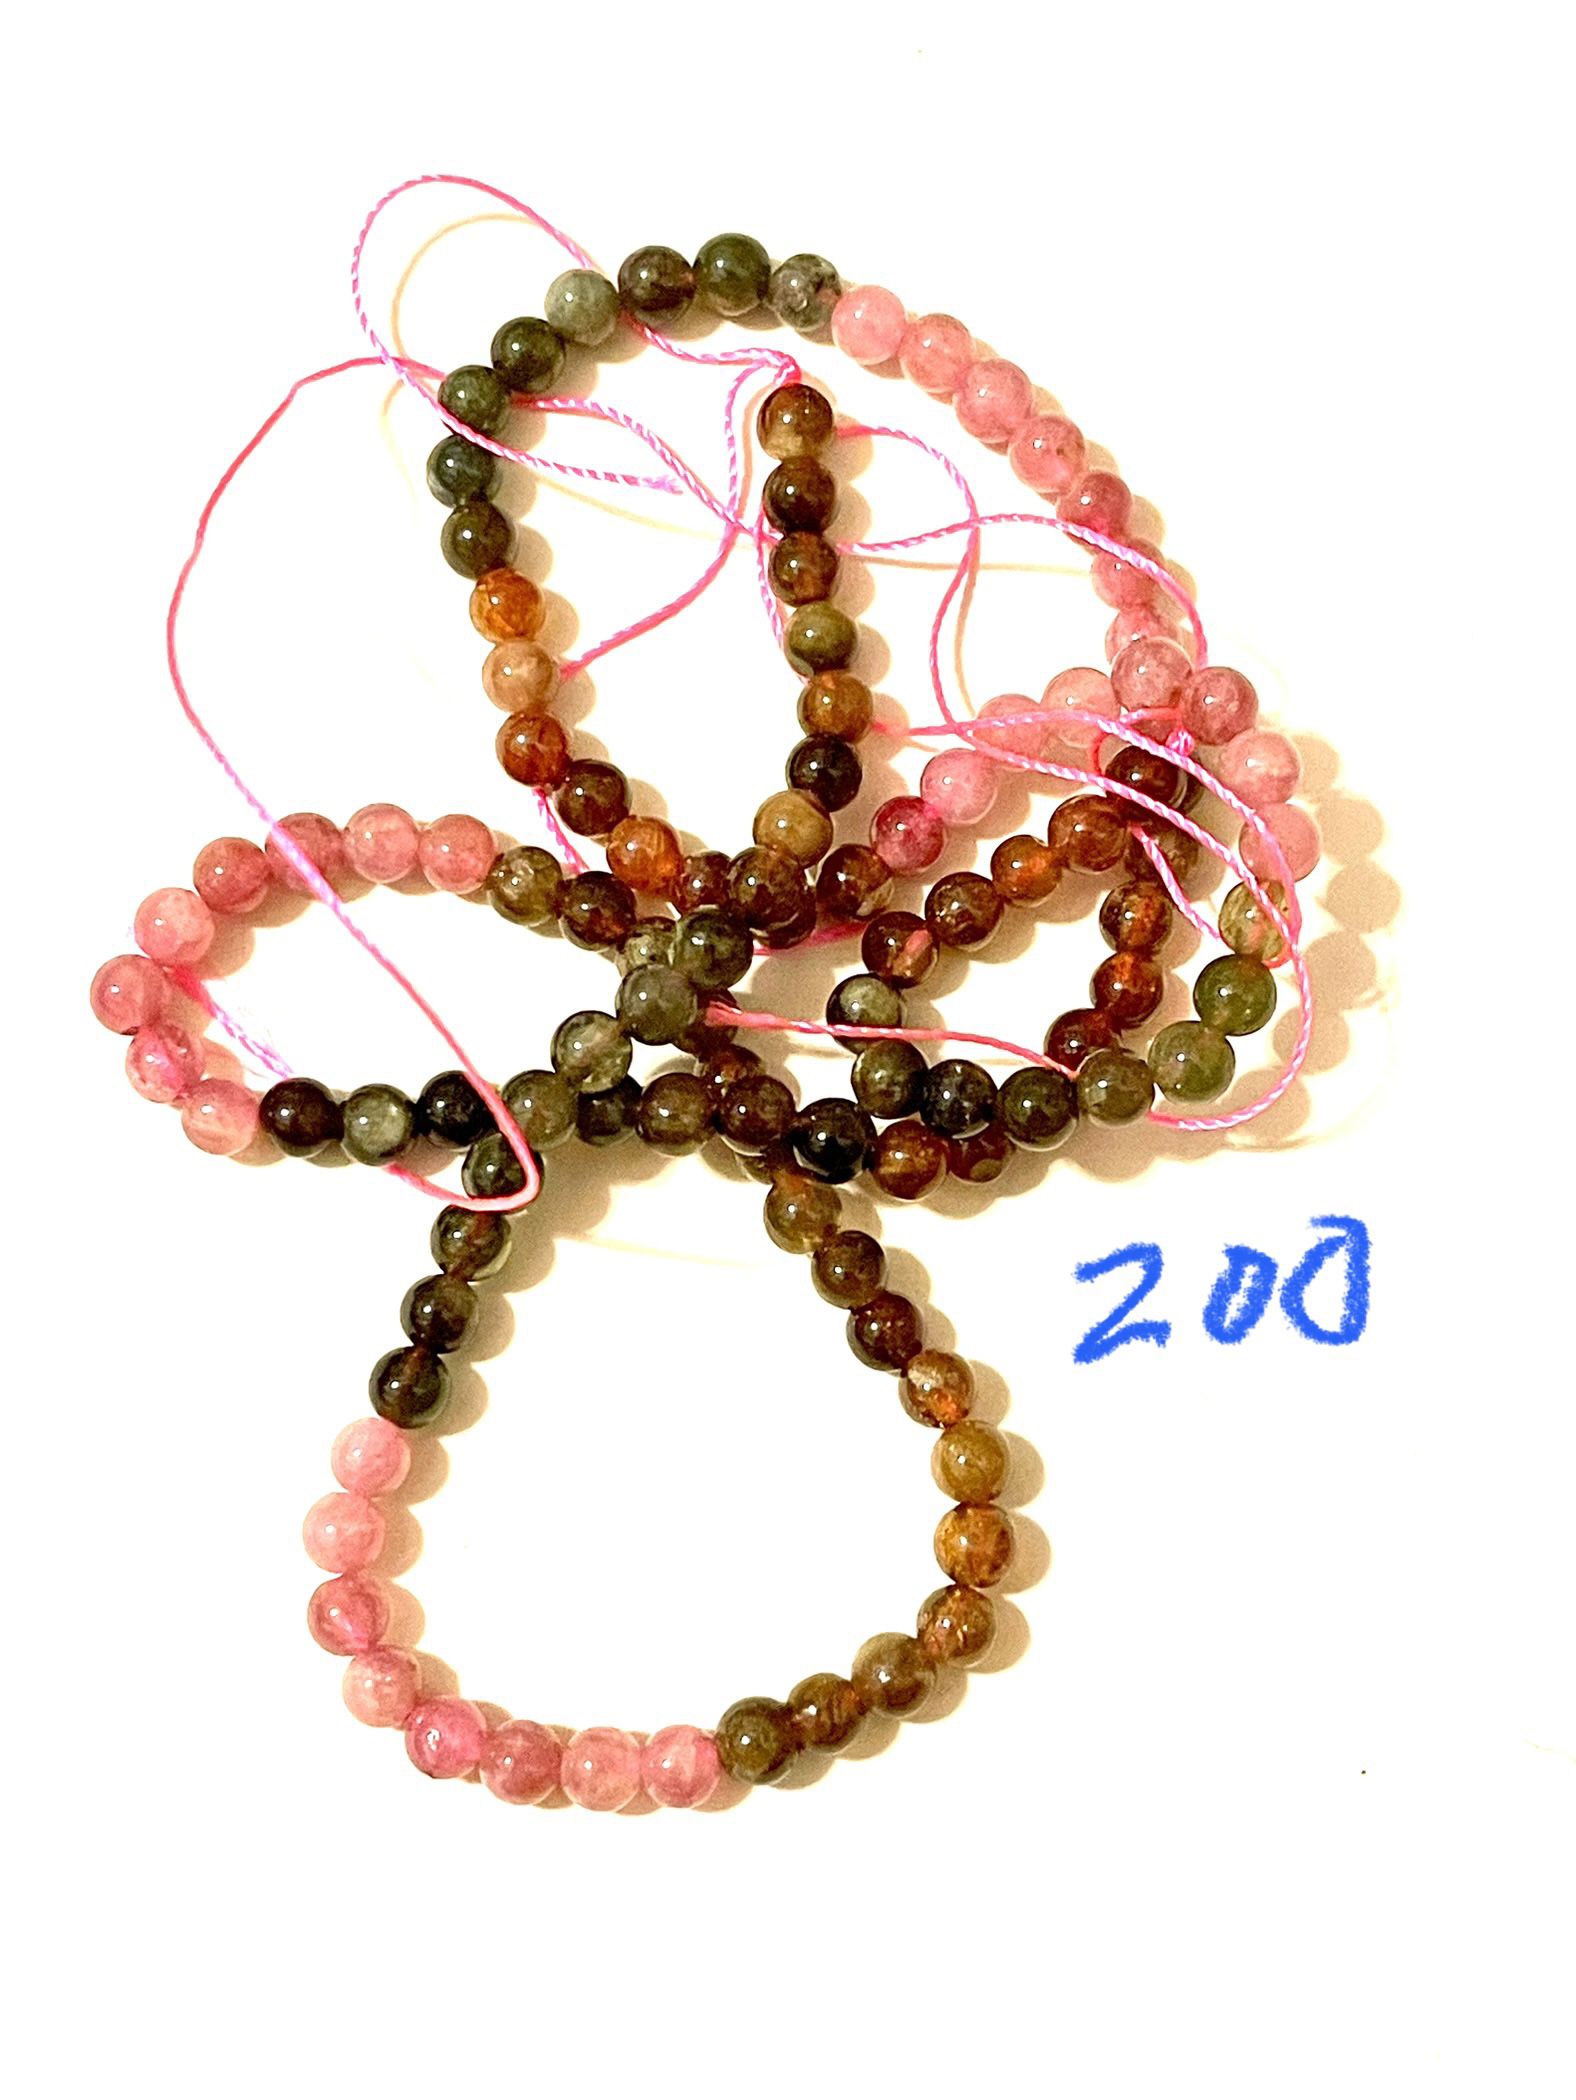 Strand Of 4mm Tourmaline Beads